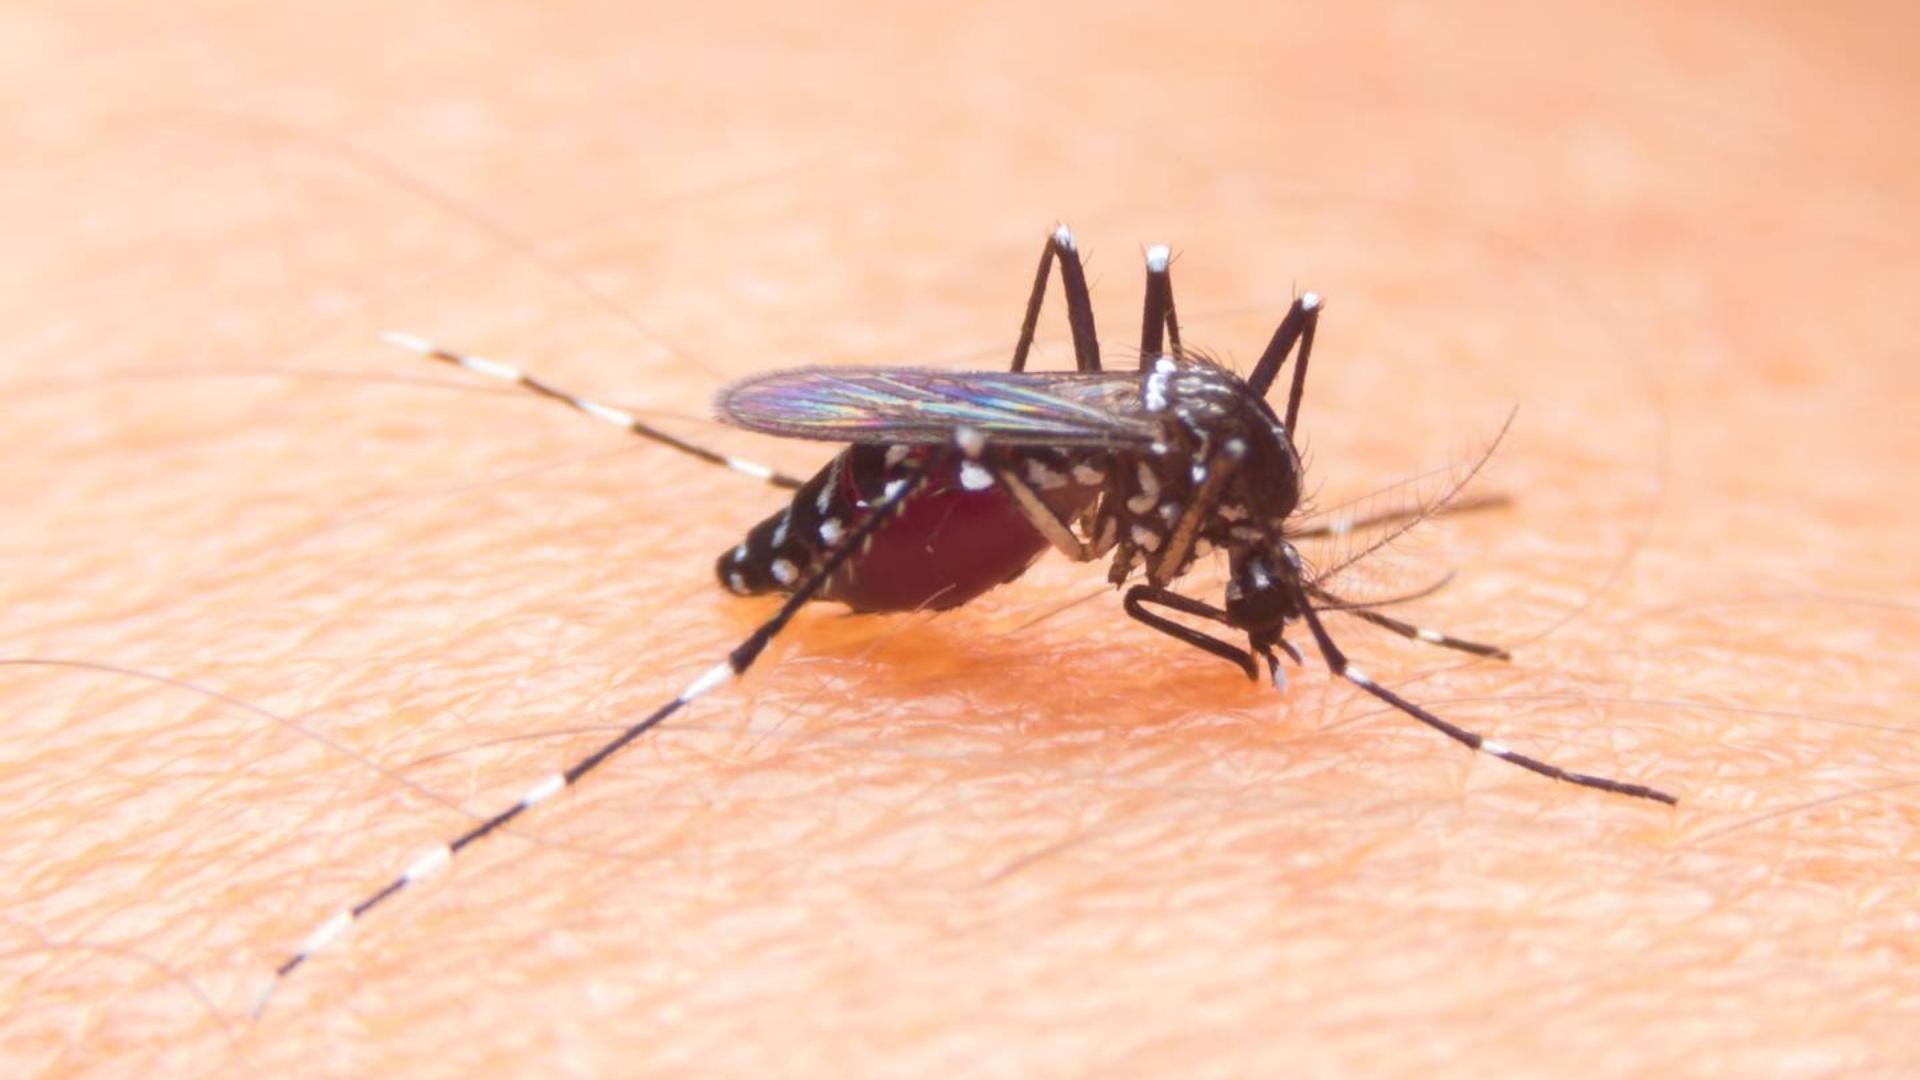 Mosquito que transmite el dengue. Foto: Shutterstock